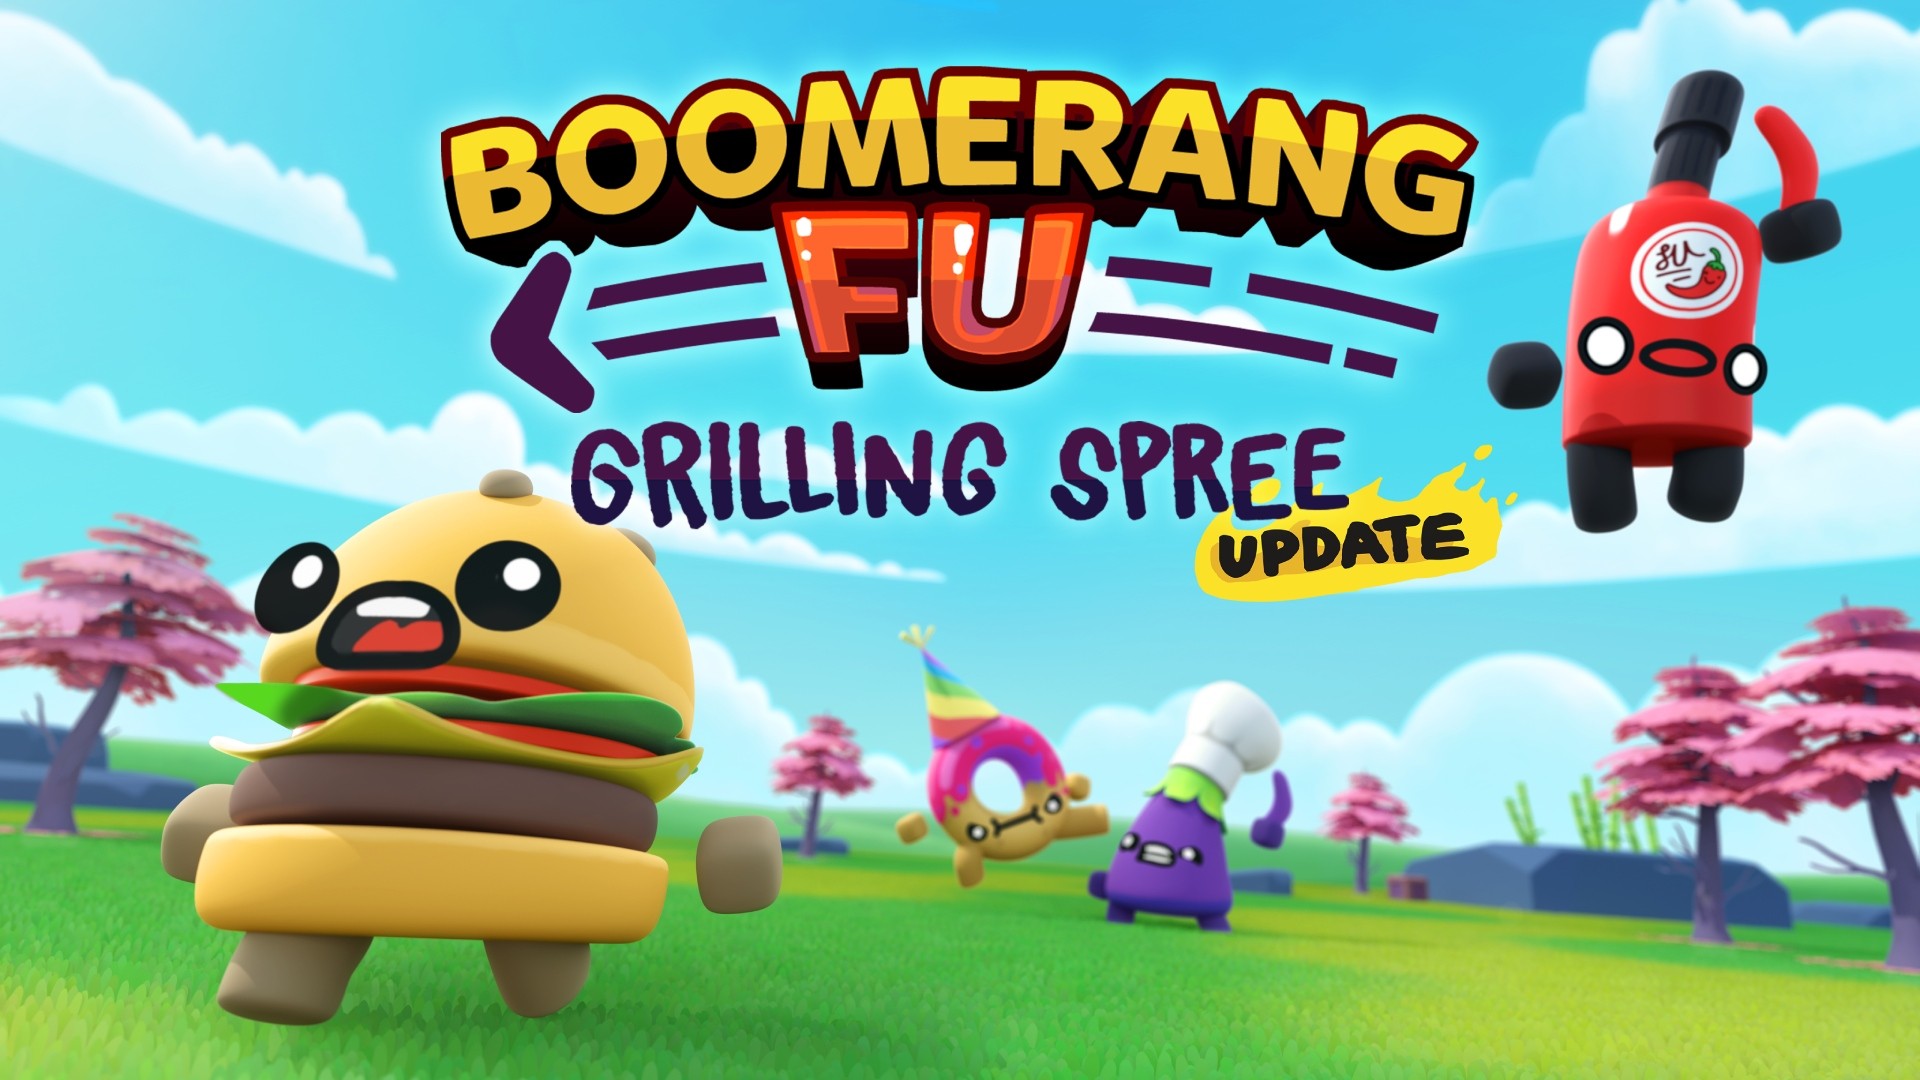 Boomerang Fu: Grilling Spree Update